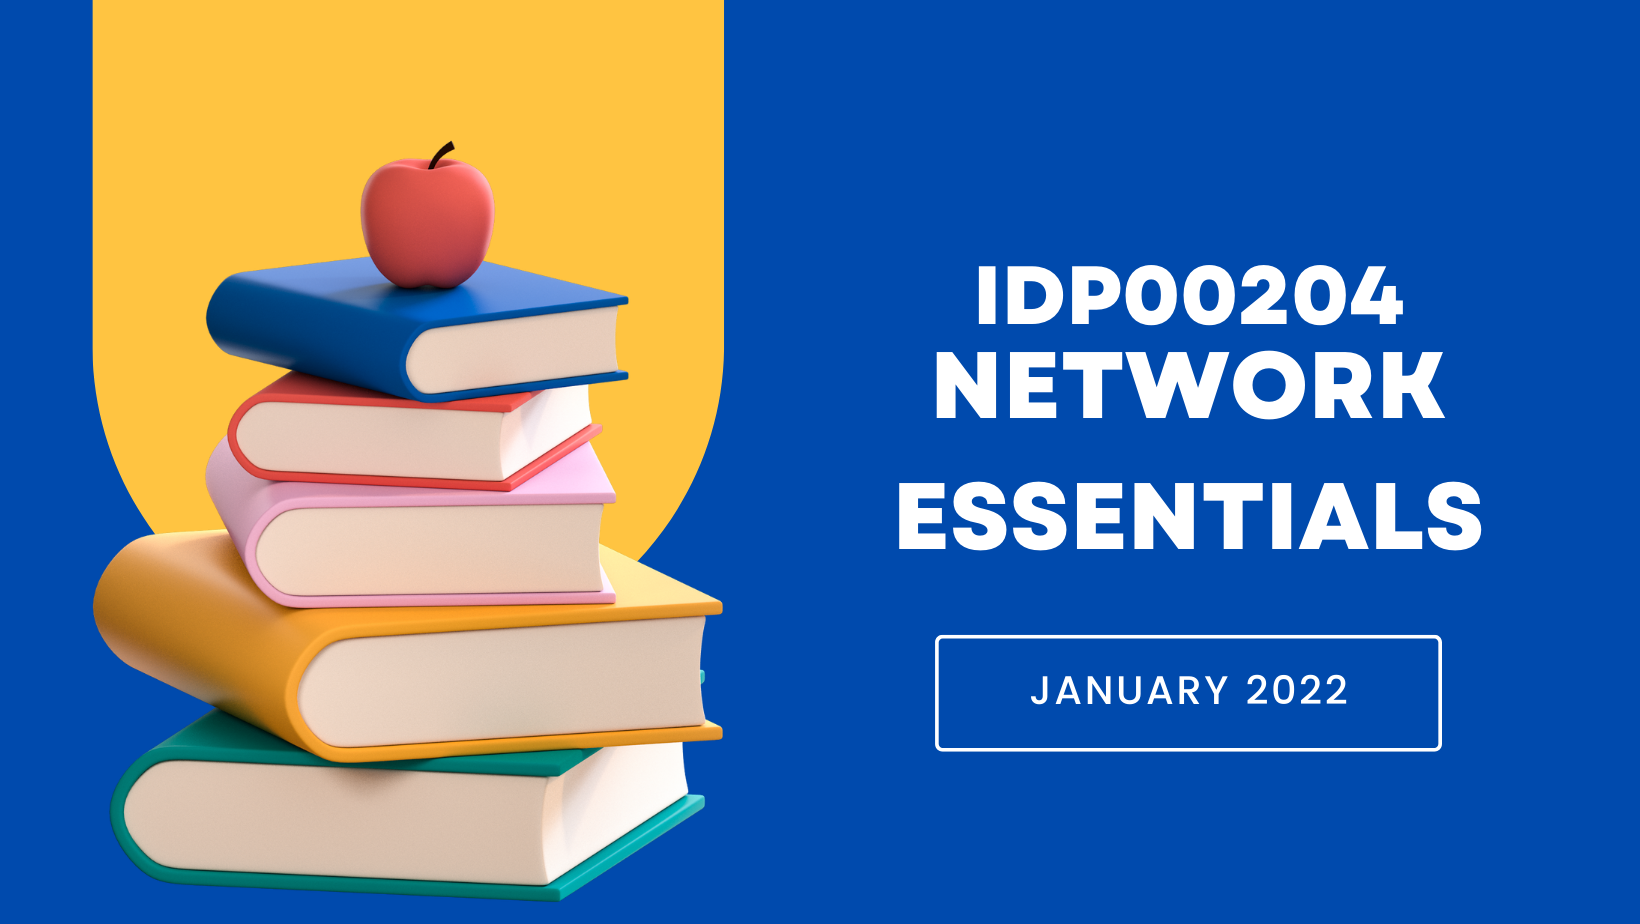 IDP00204 - NETWORK ESSENTIALS